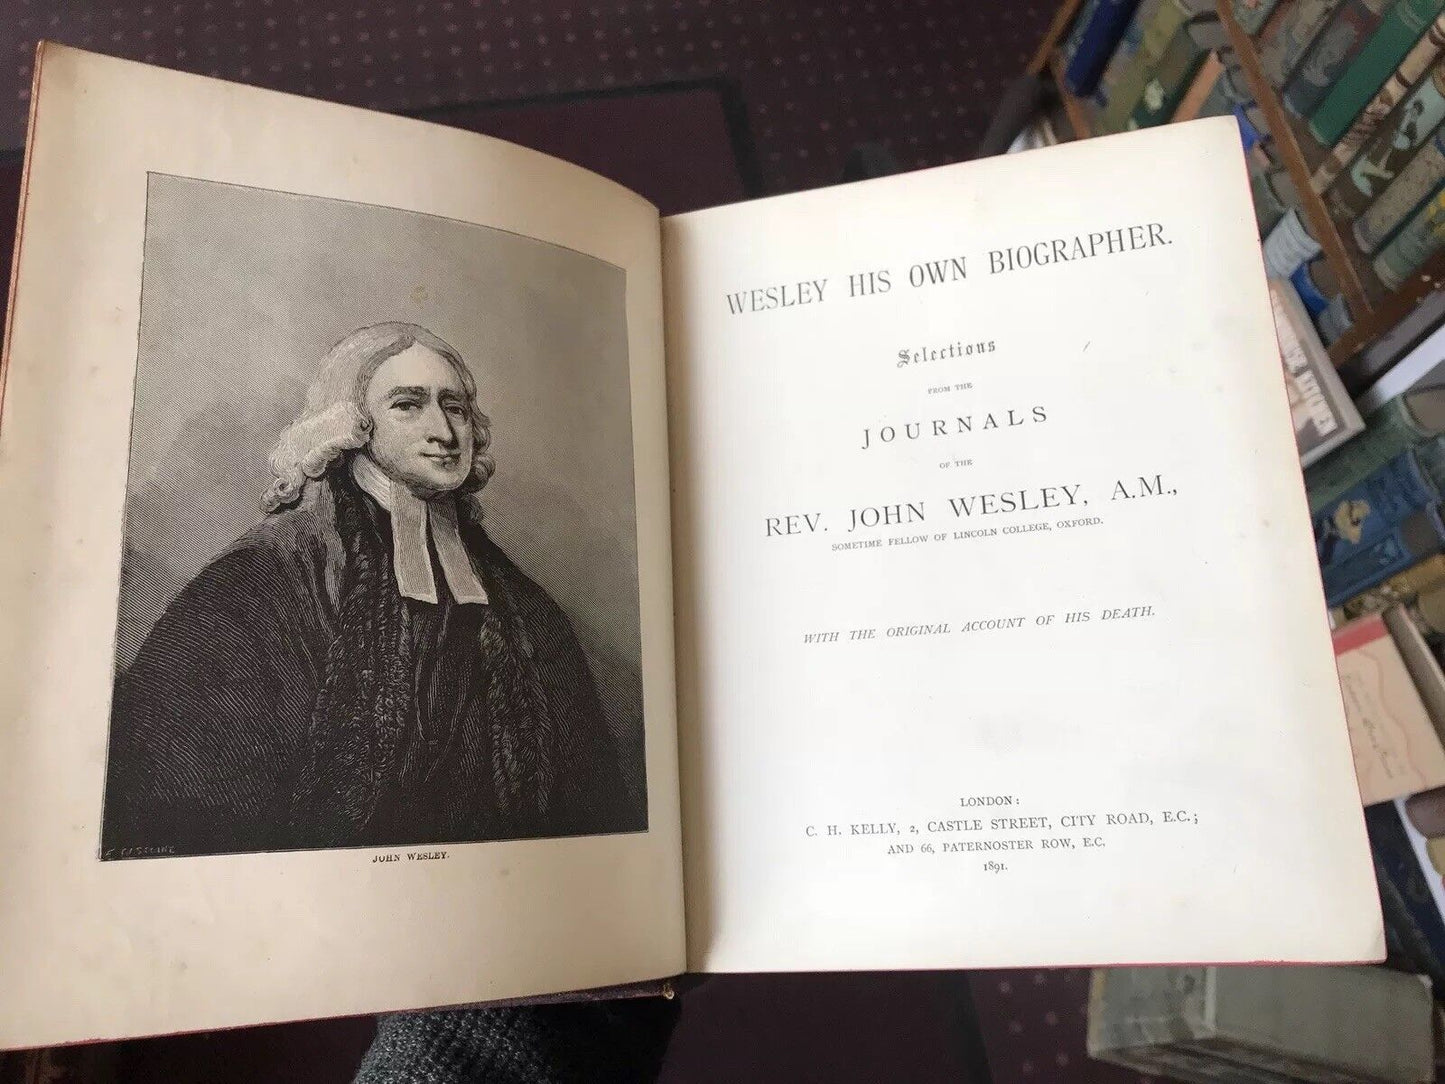 WESLEY HIS OWN BIOGRAPHER Journals of John Wesley ACCOUNT OF HIS DEATH 1891